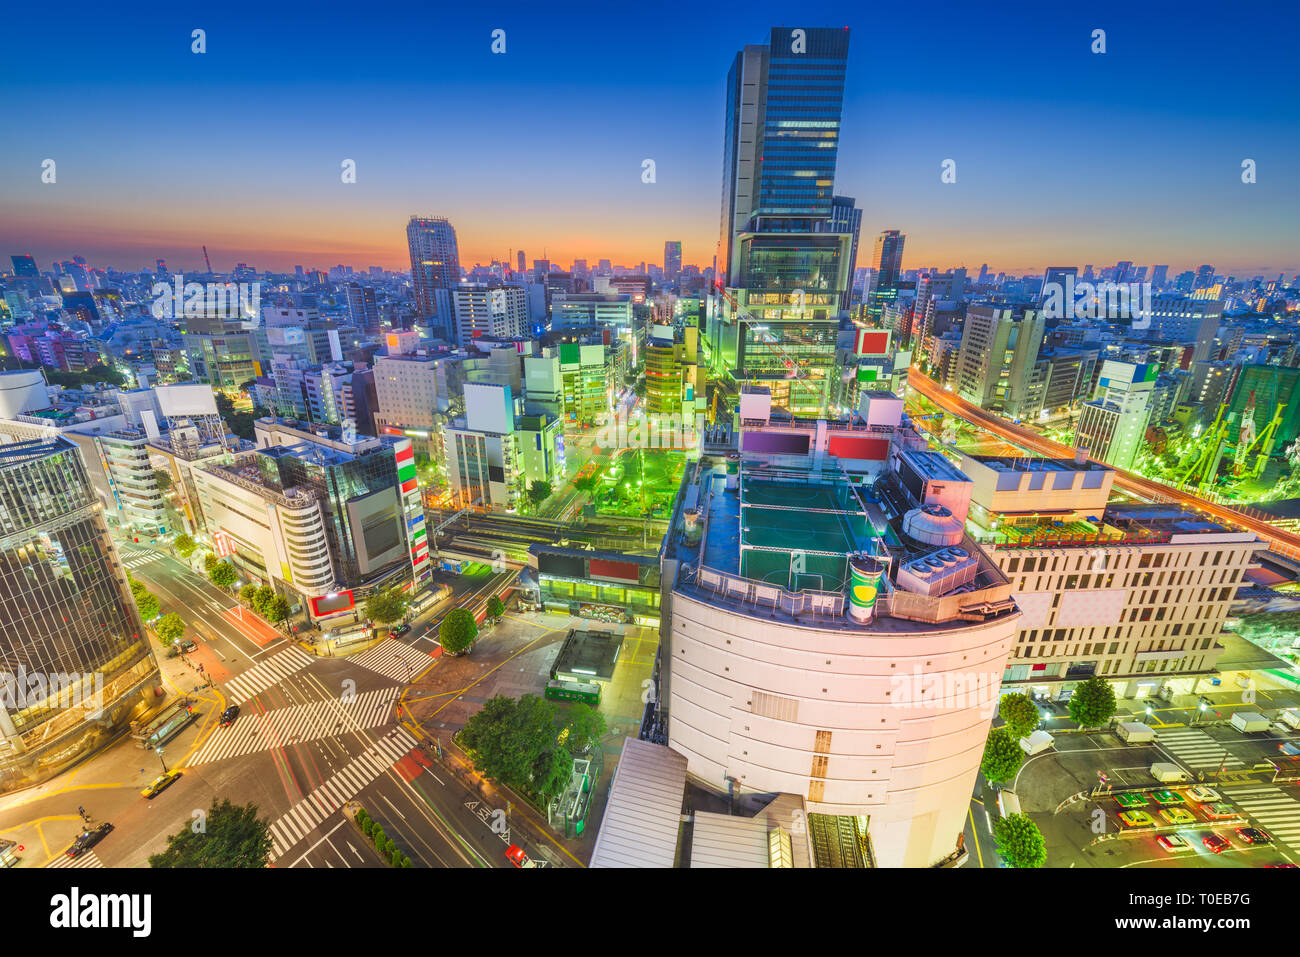 Tokyo, Japan city skyline over Shibuya Ward with the Shinjuku Ward skyline in the distance. Stock Photo